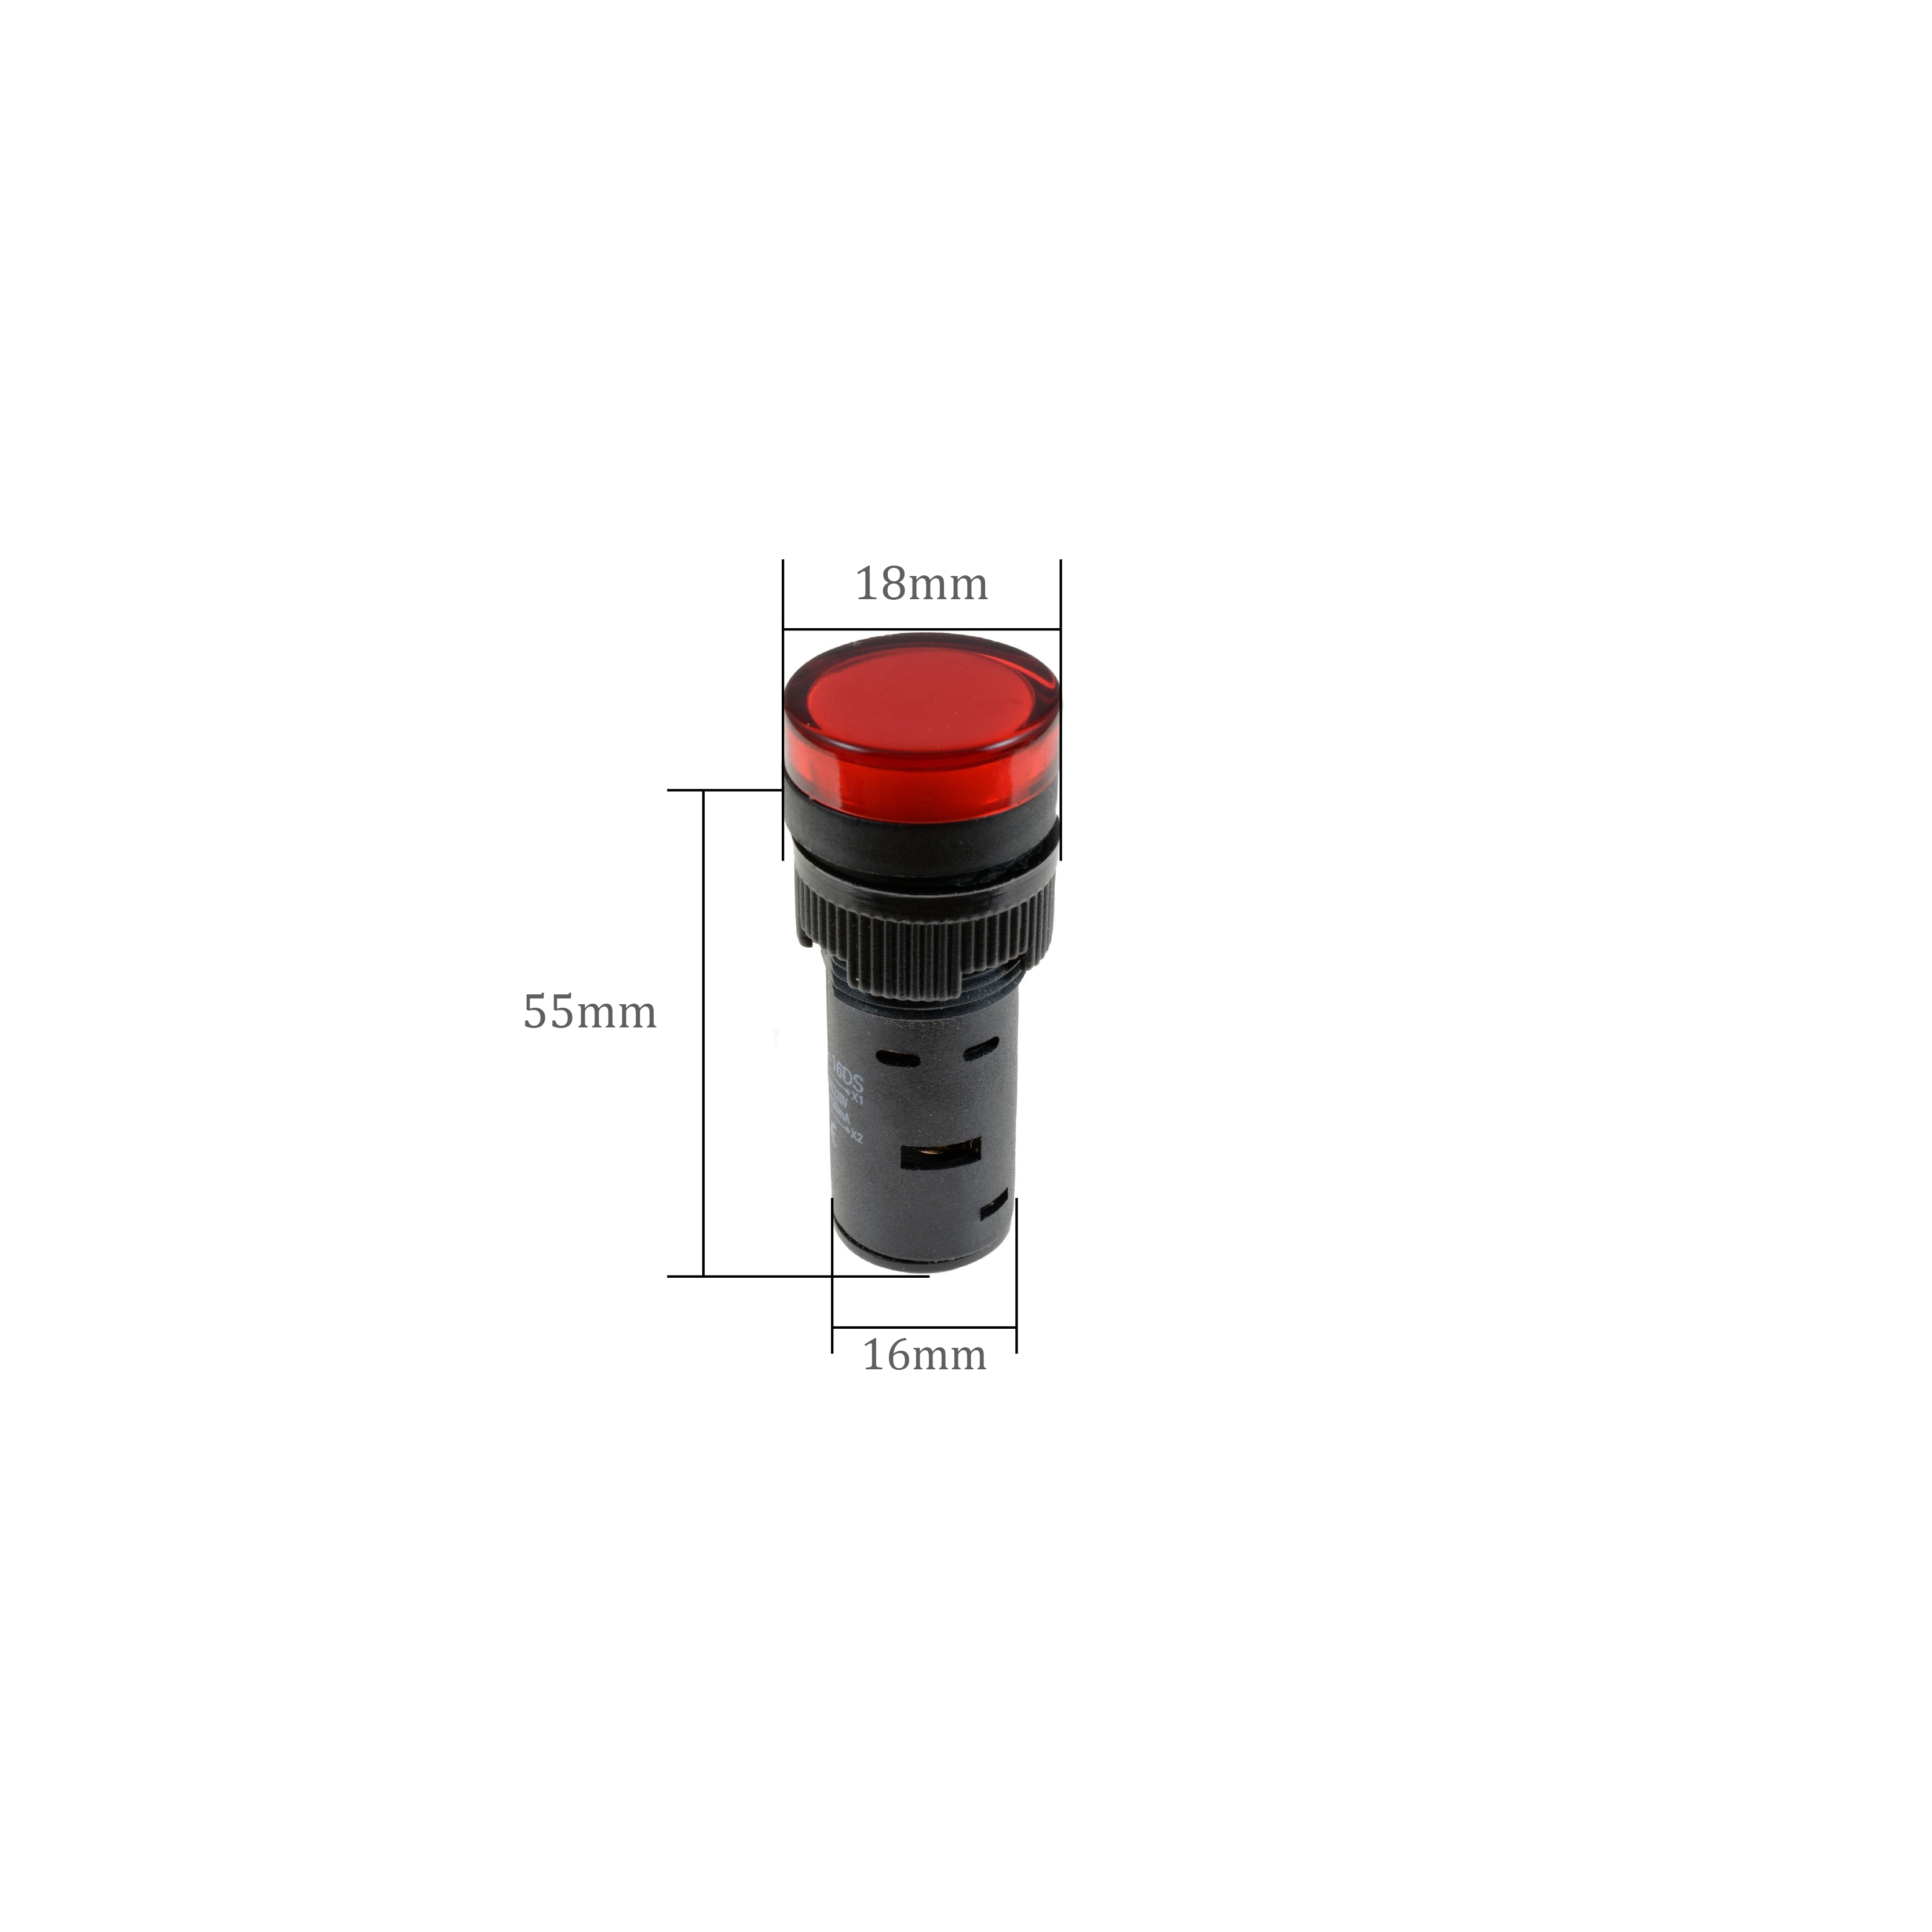 Red Indicator 24V DC (16mm)